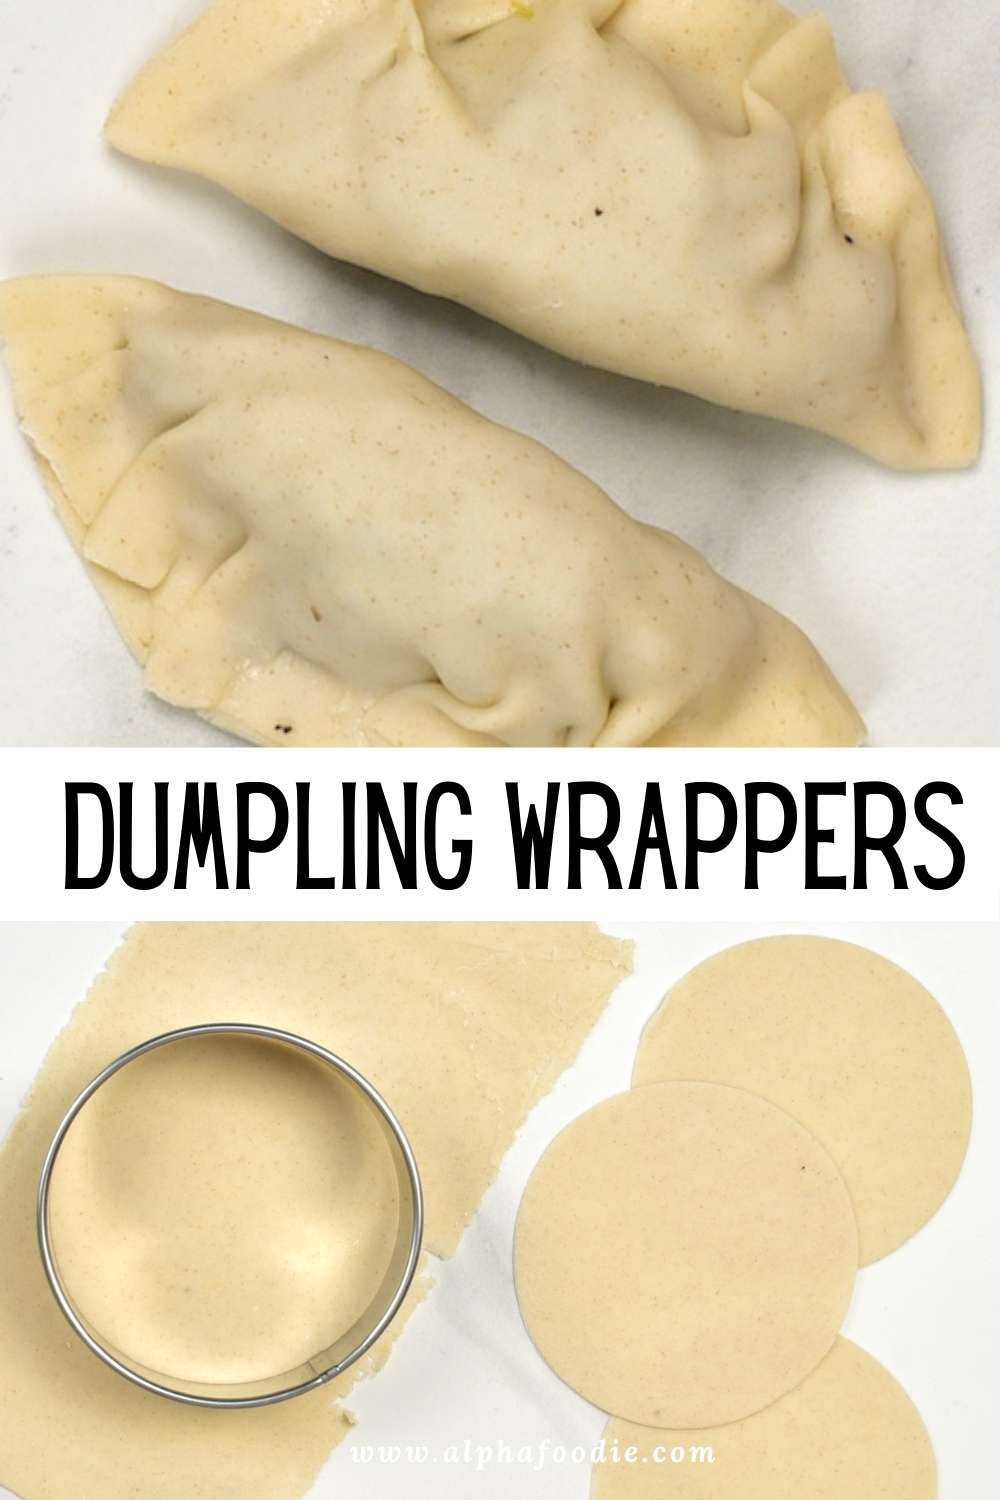 How to Make Dumpling Wrappers (Potsticker, Wonton, Gyoza)